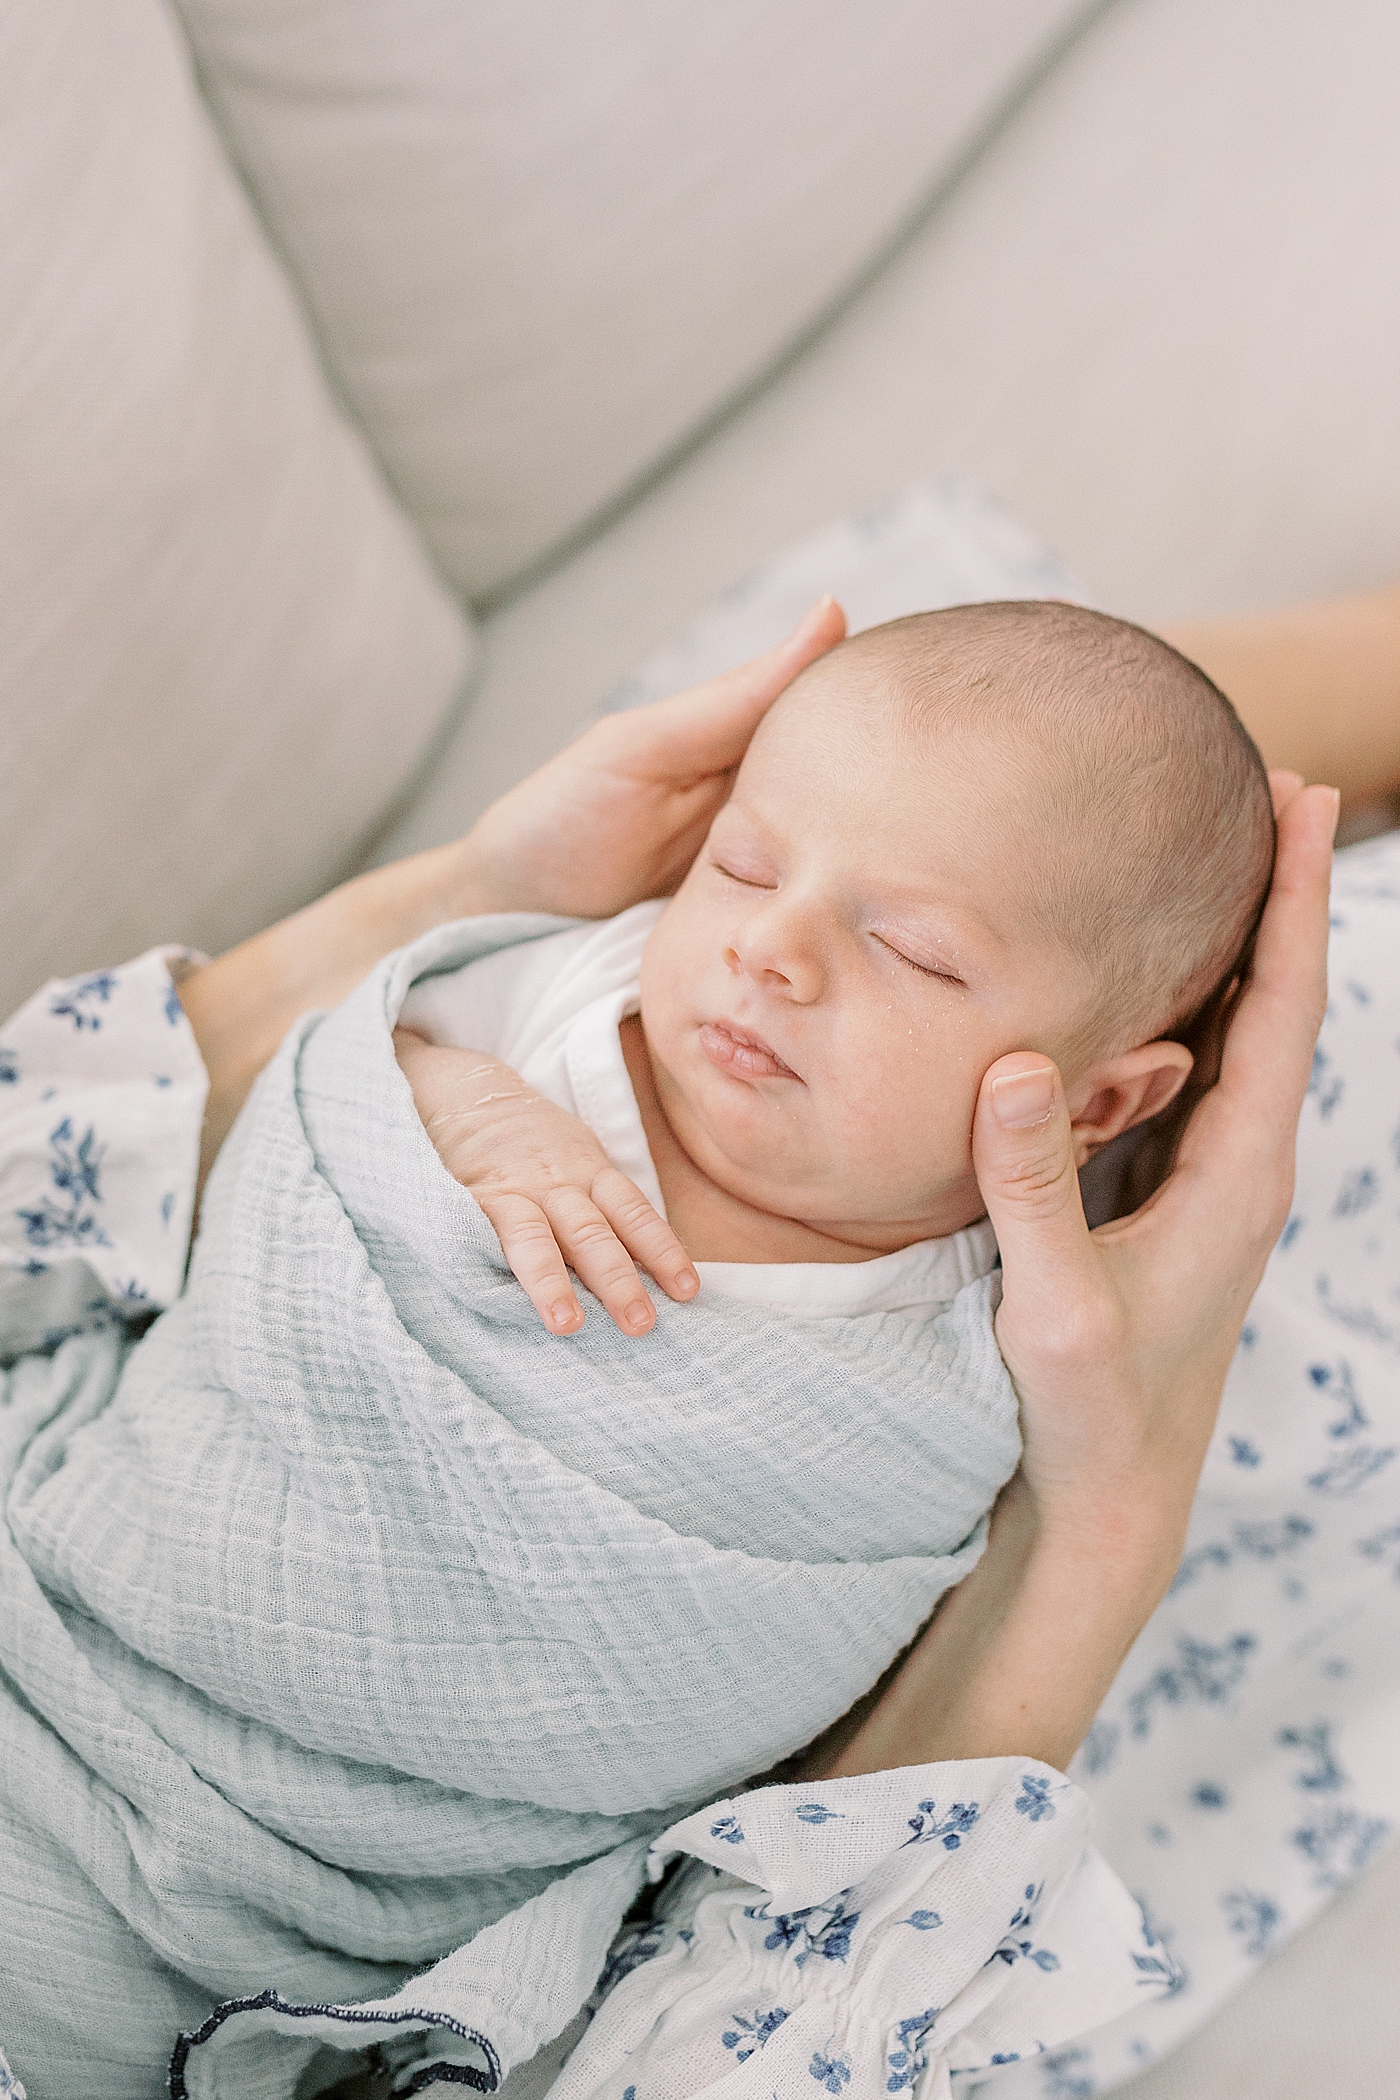 Detail of sleeping newborn during lifestyle newborn photos | Image by Caitlyn Motycka